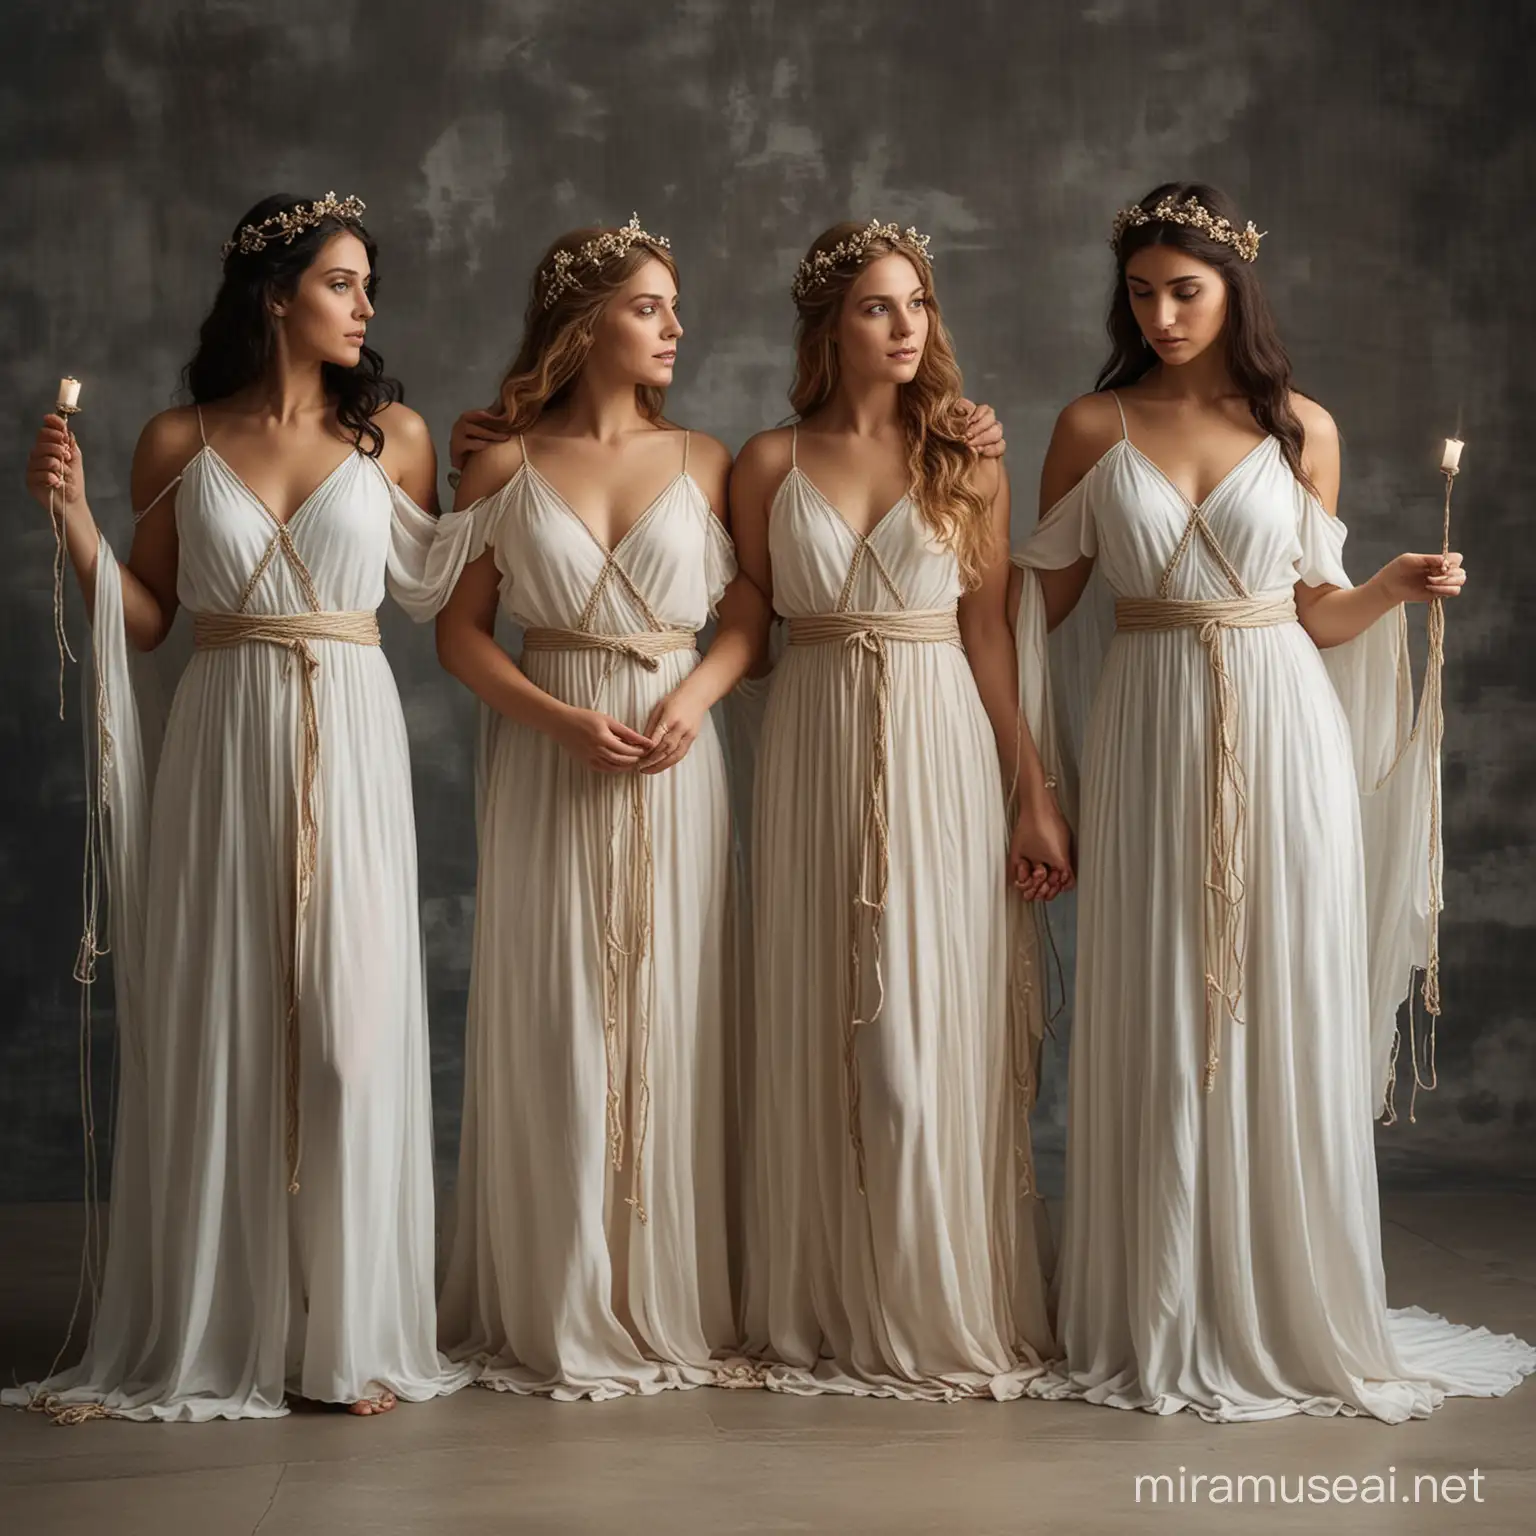 Greek mythology 3 fates beautiful women standing up wearing dresses holding thread of life
